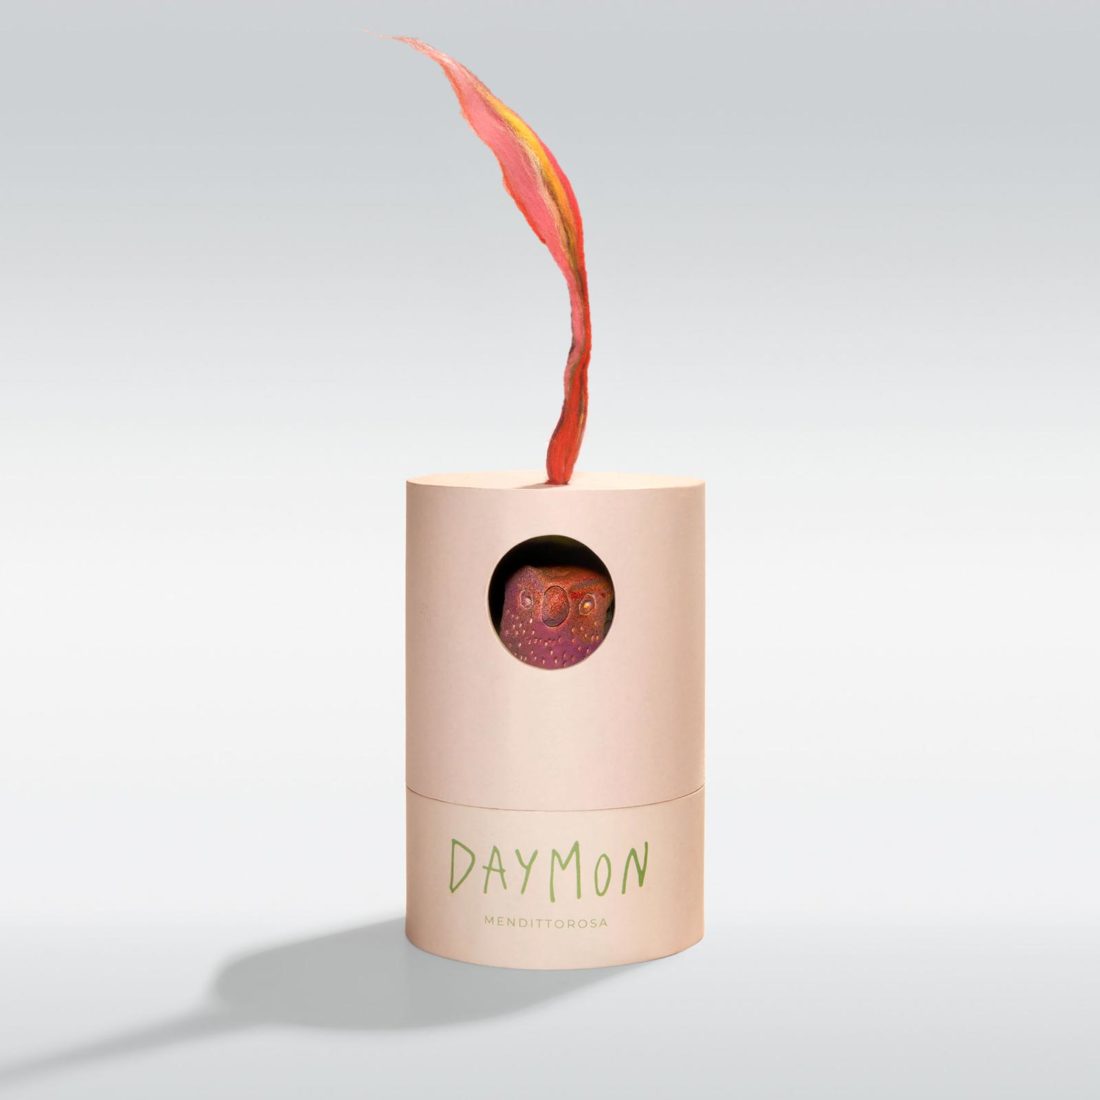 Daymon - Mendittorosa